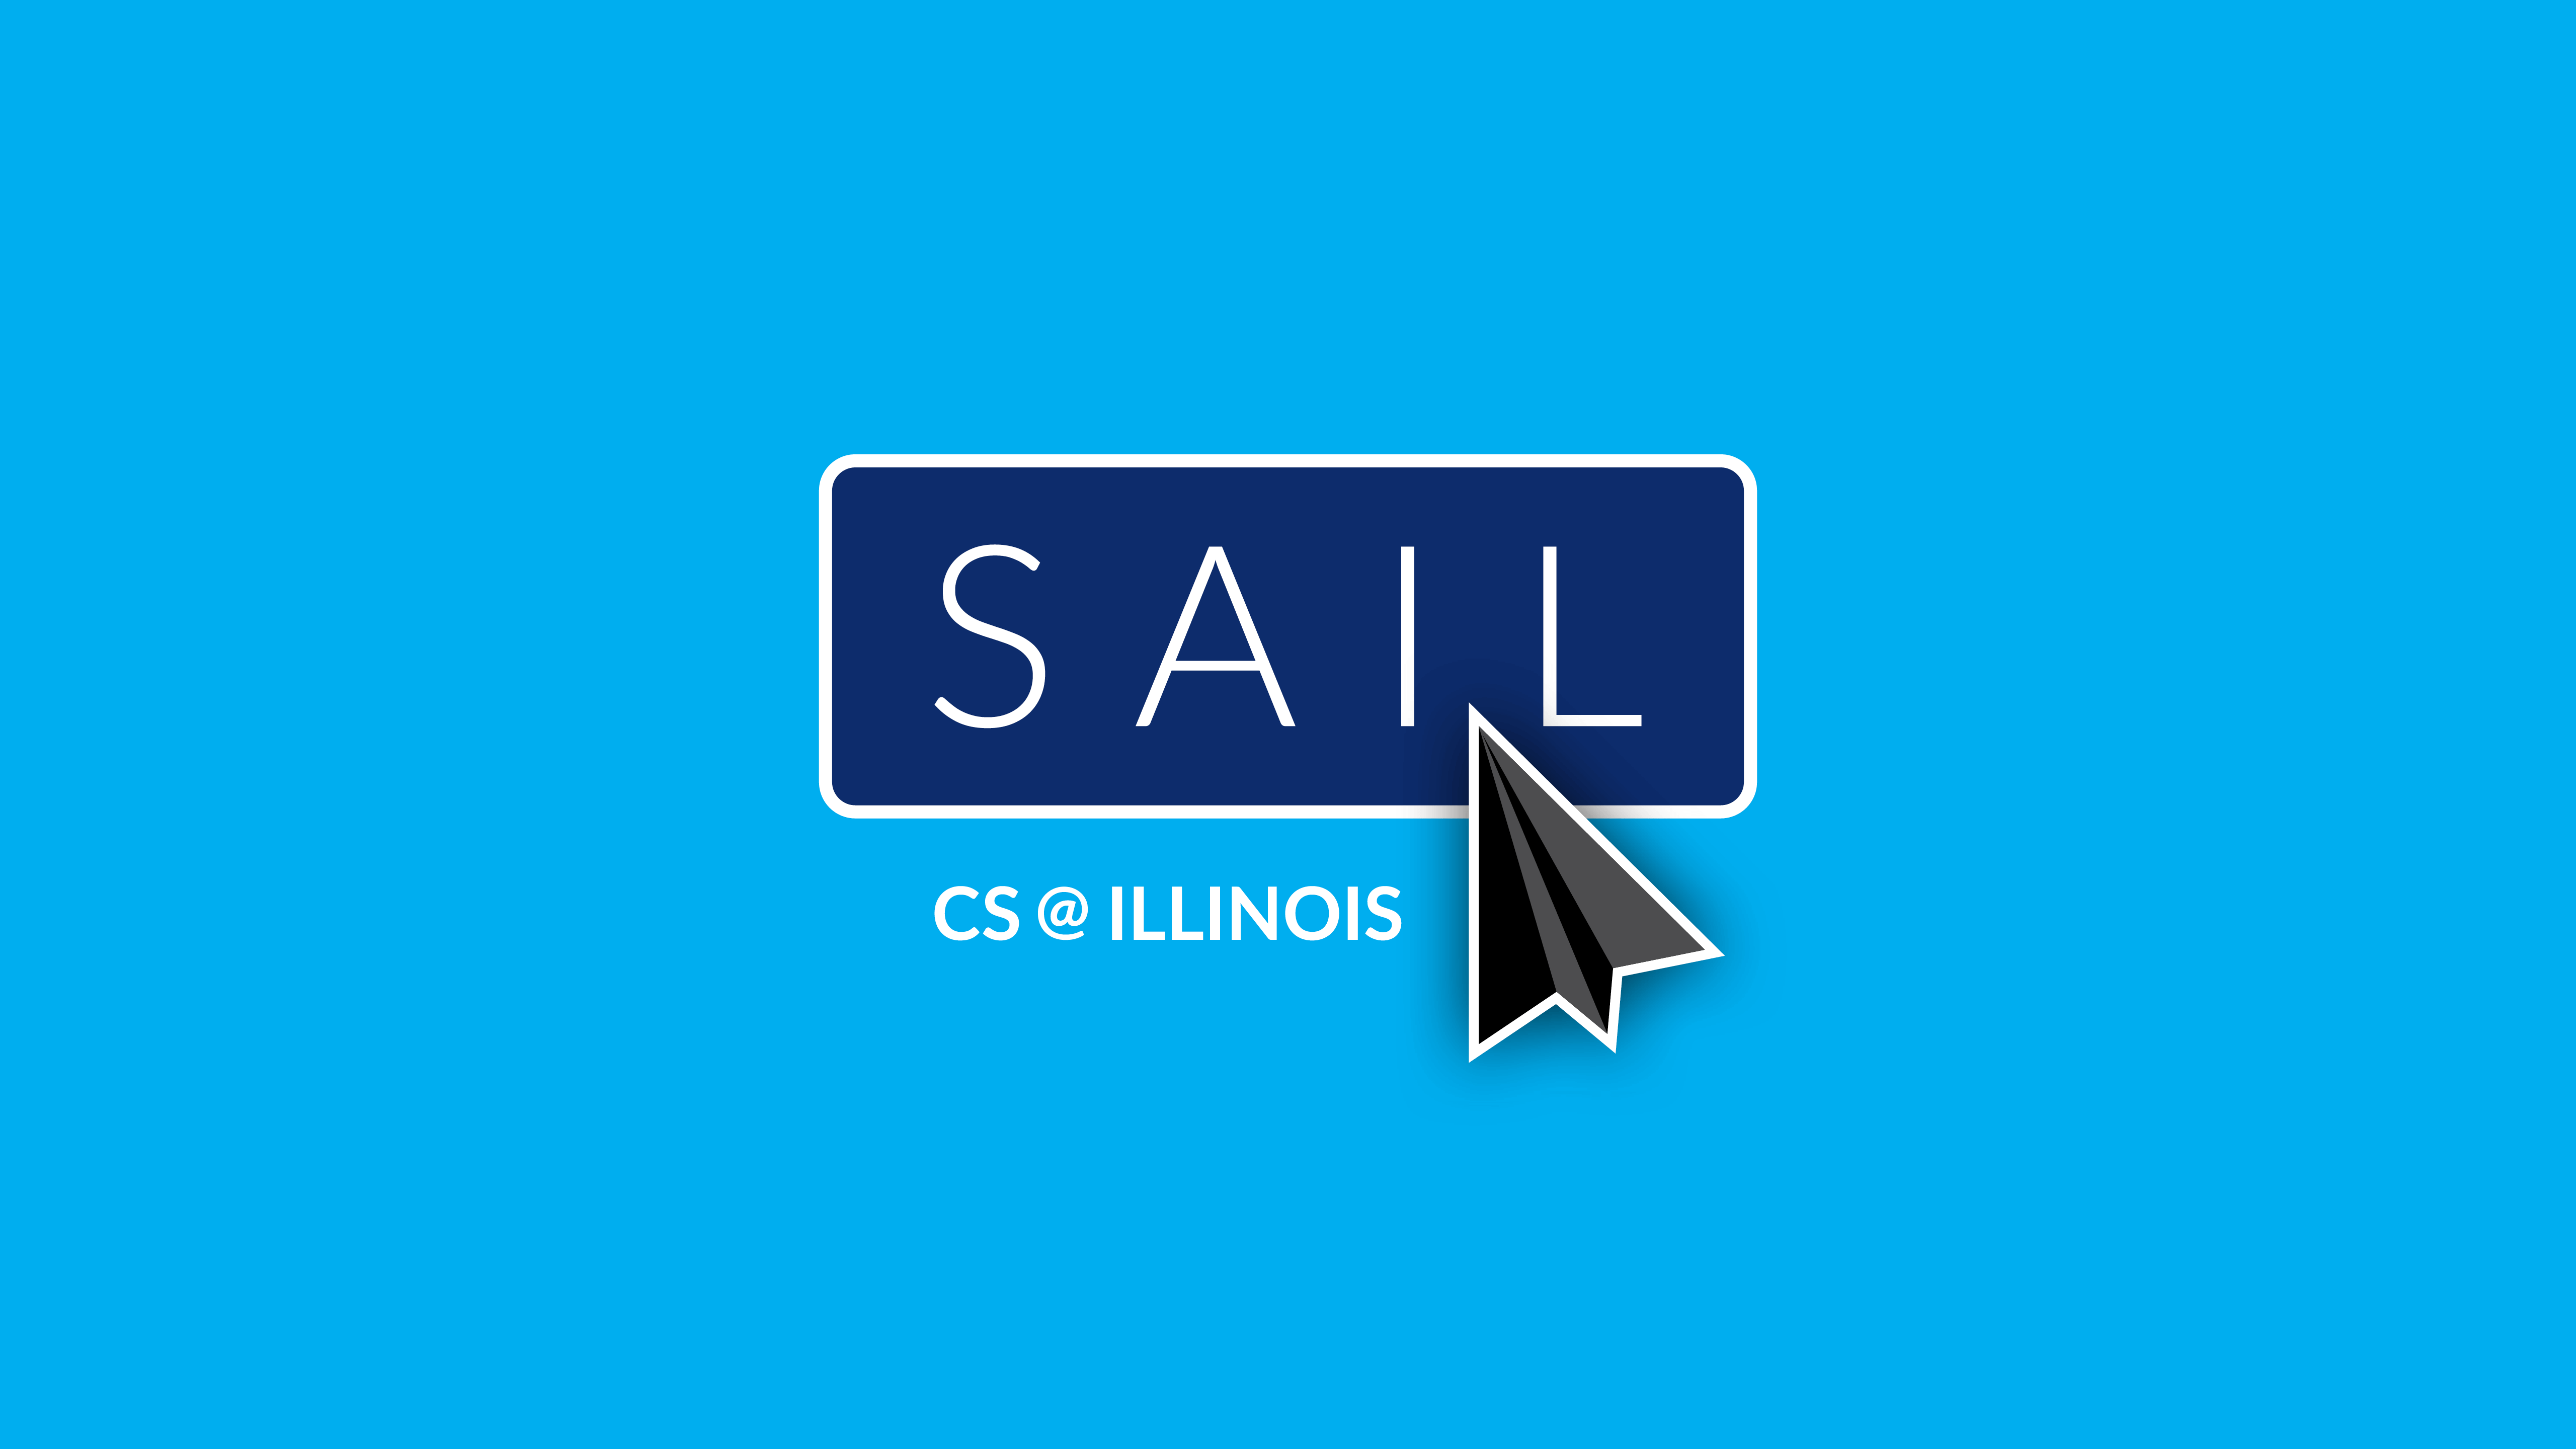 Illinois Computer Science - SAIL